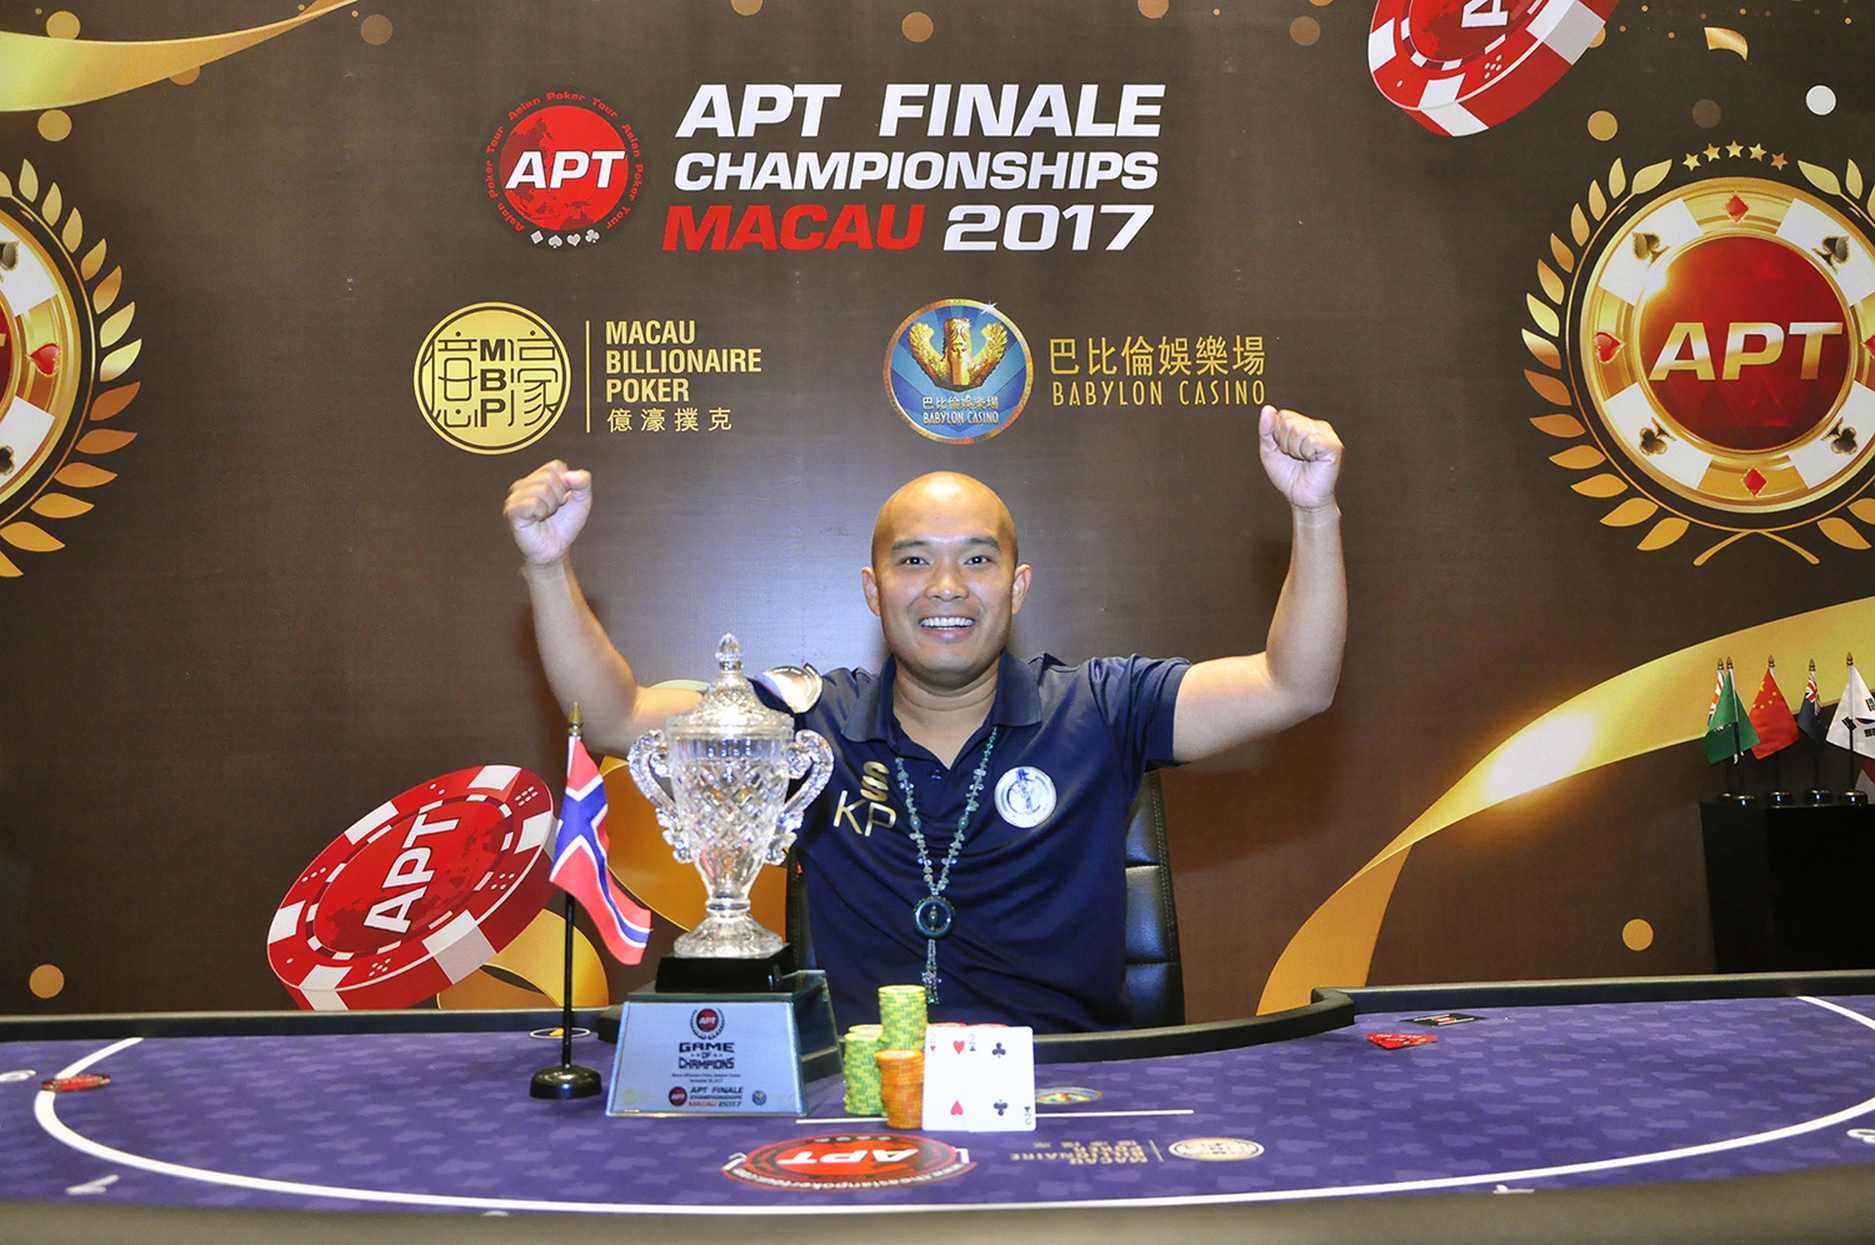 Asian Poker Tour Says Macau Tournaments Still On Despite Social Gaming Crackdown